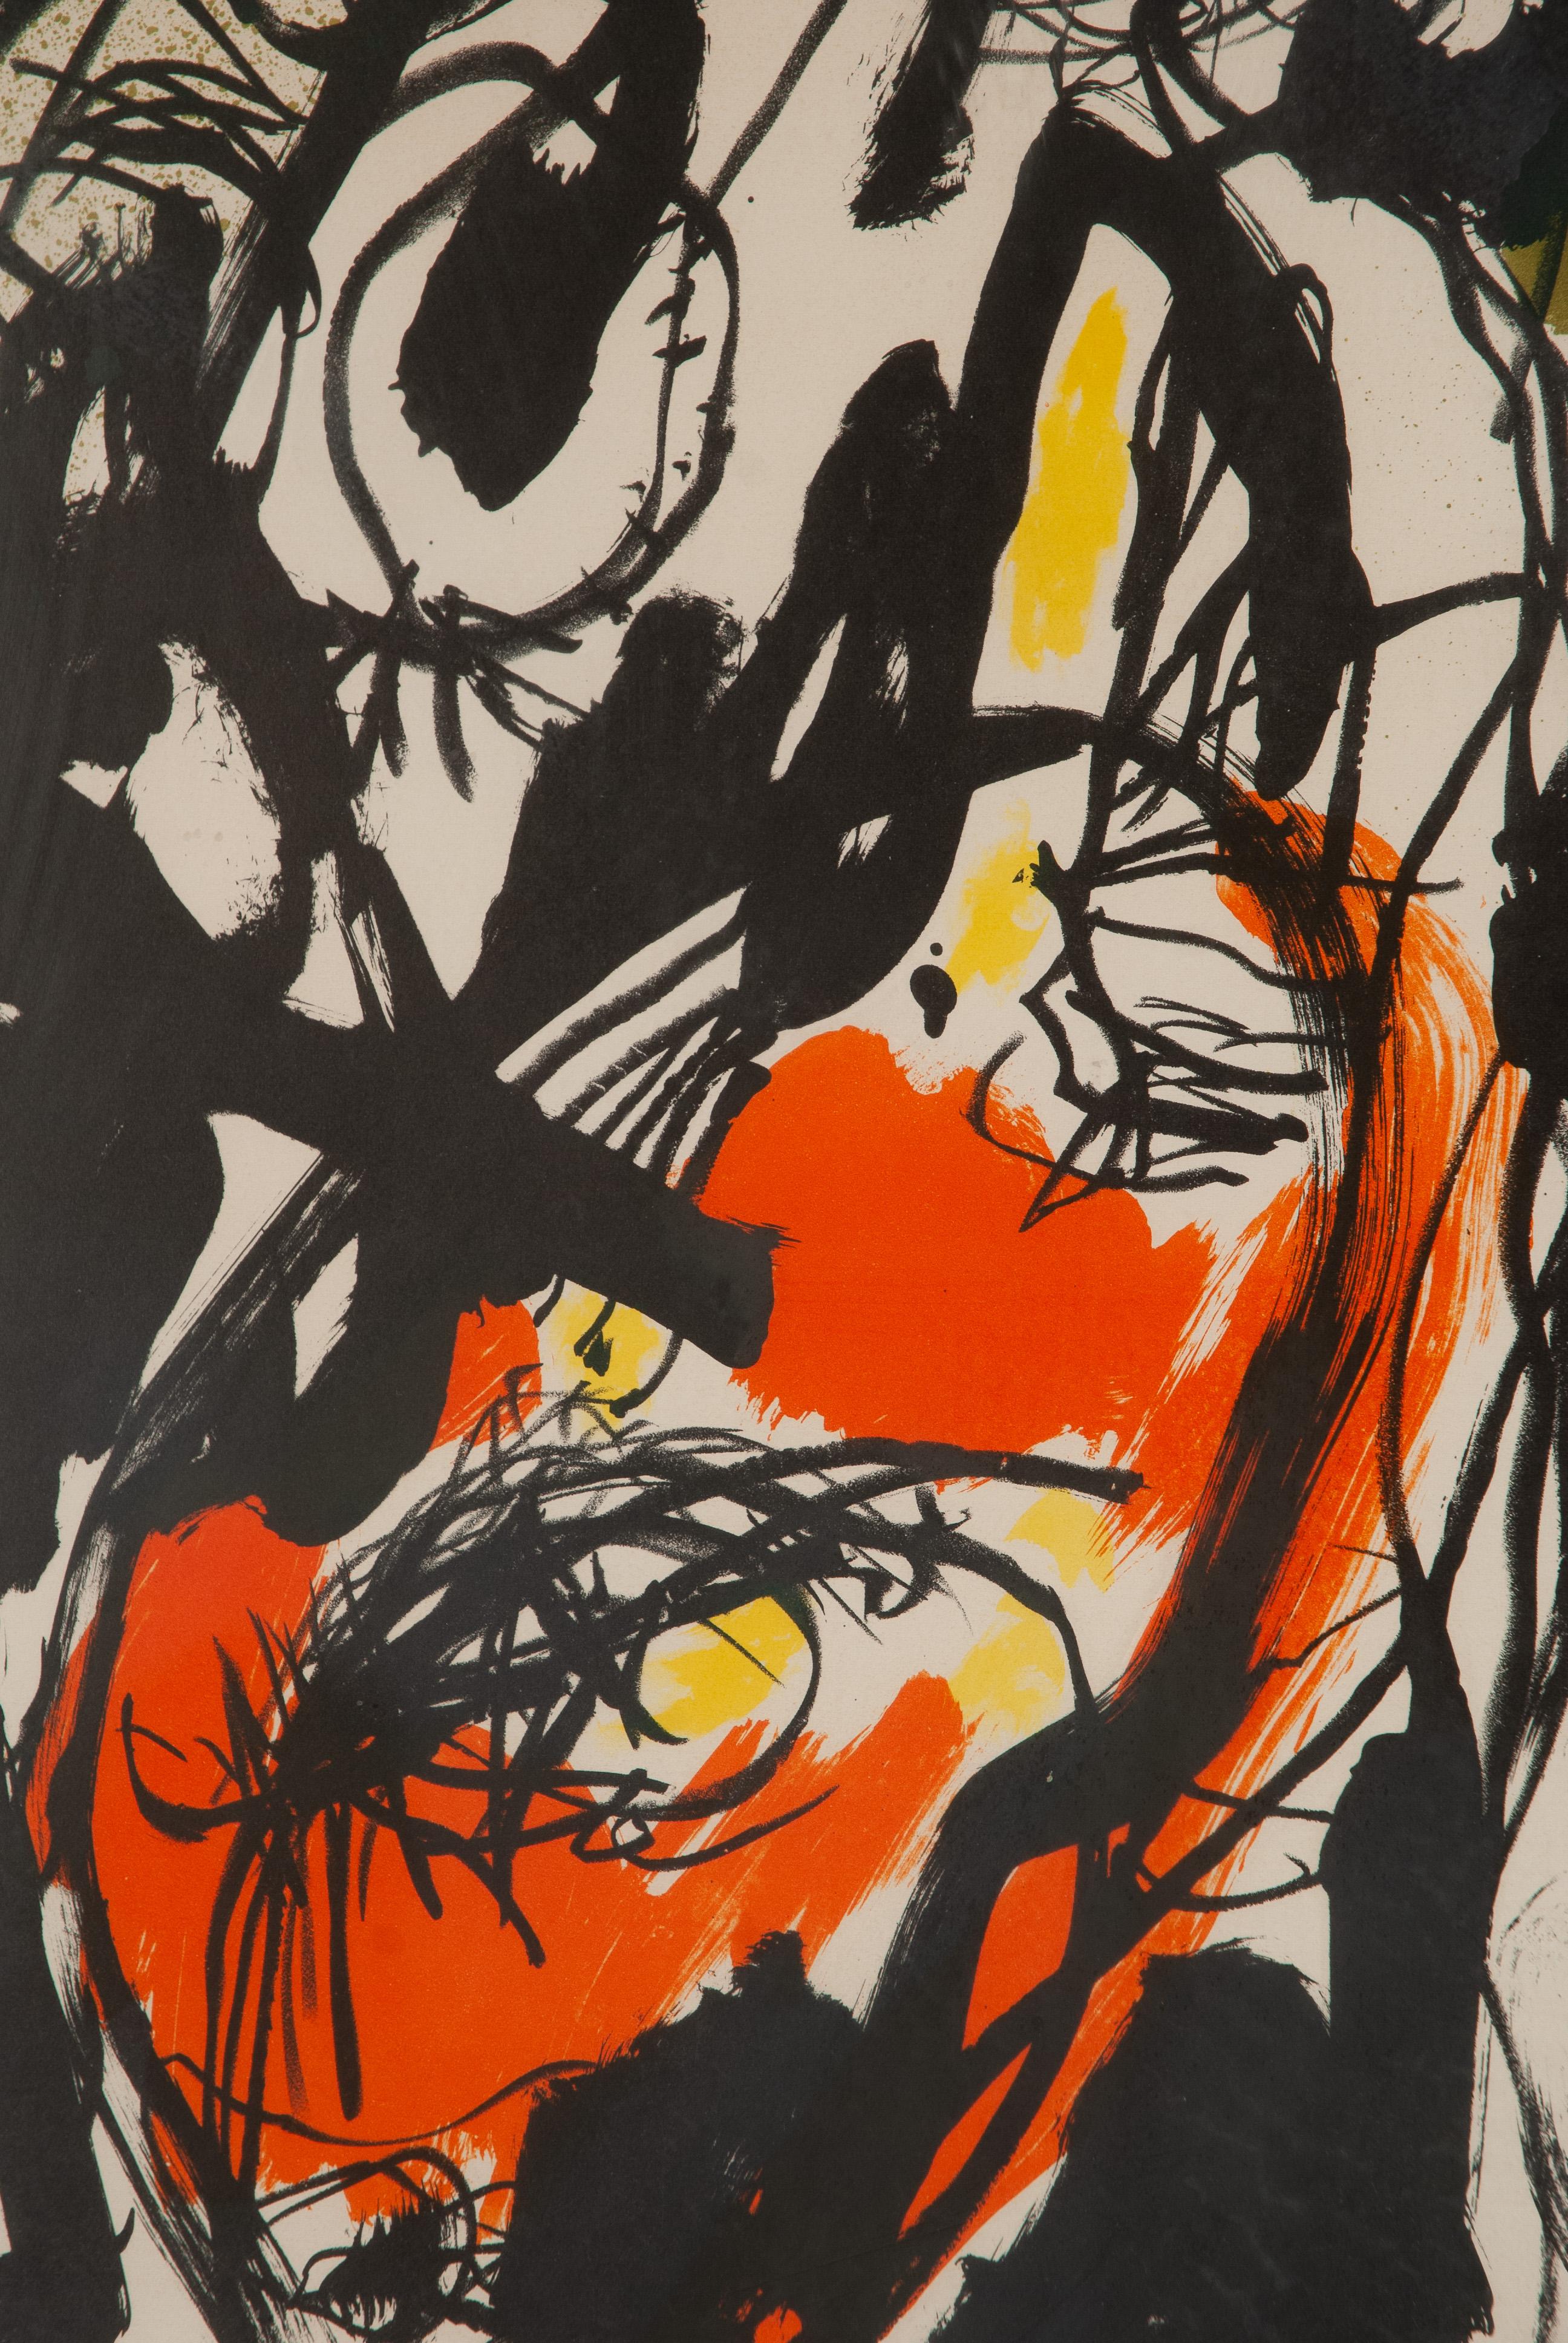 Von Kopf bis Fuss (From Head to Toe) 10/75 - Beige Abstract Print by Asger Jorn